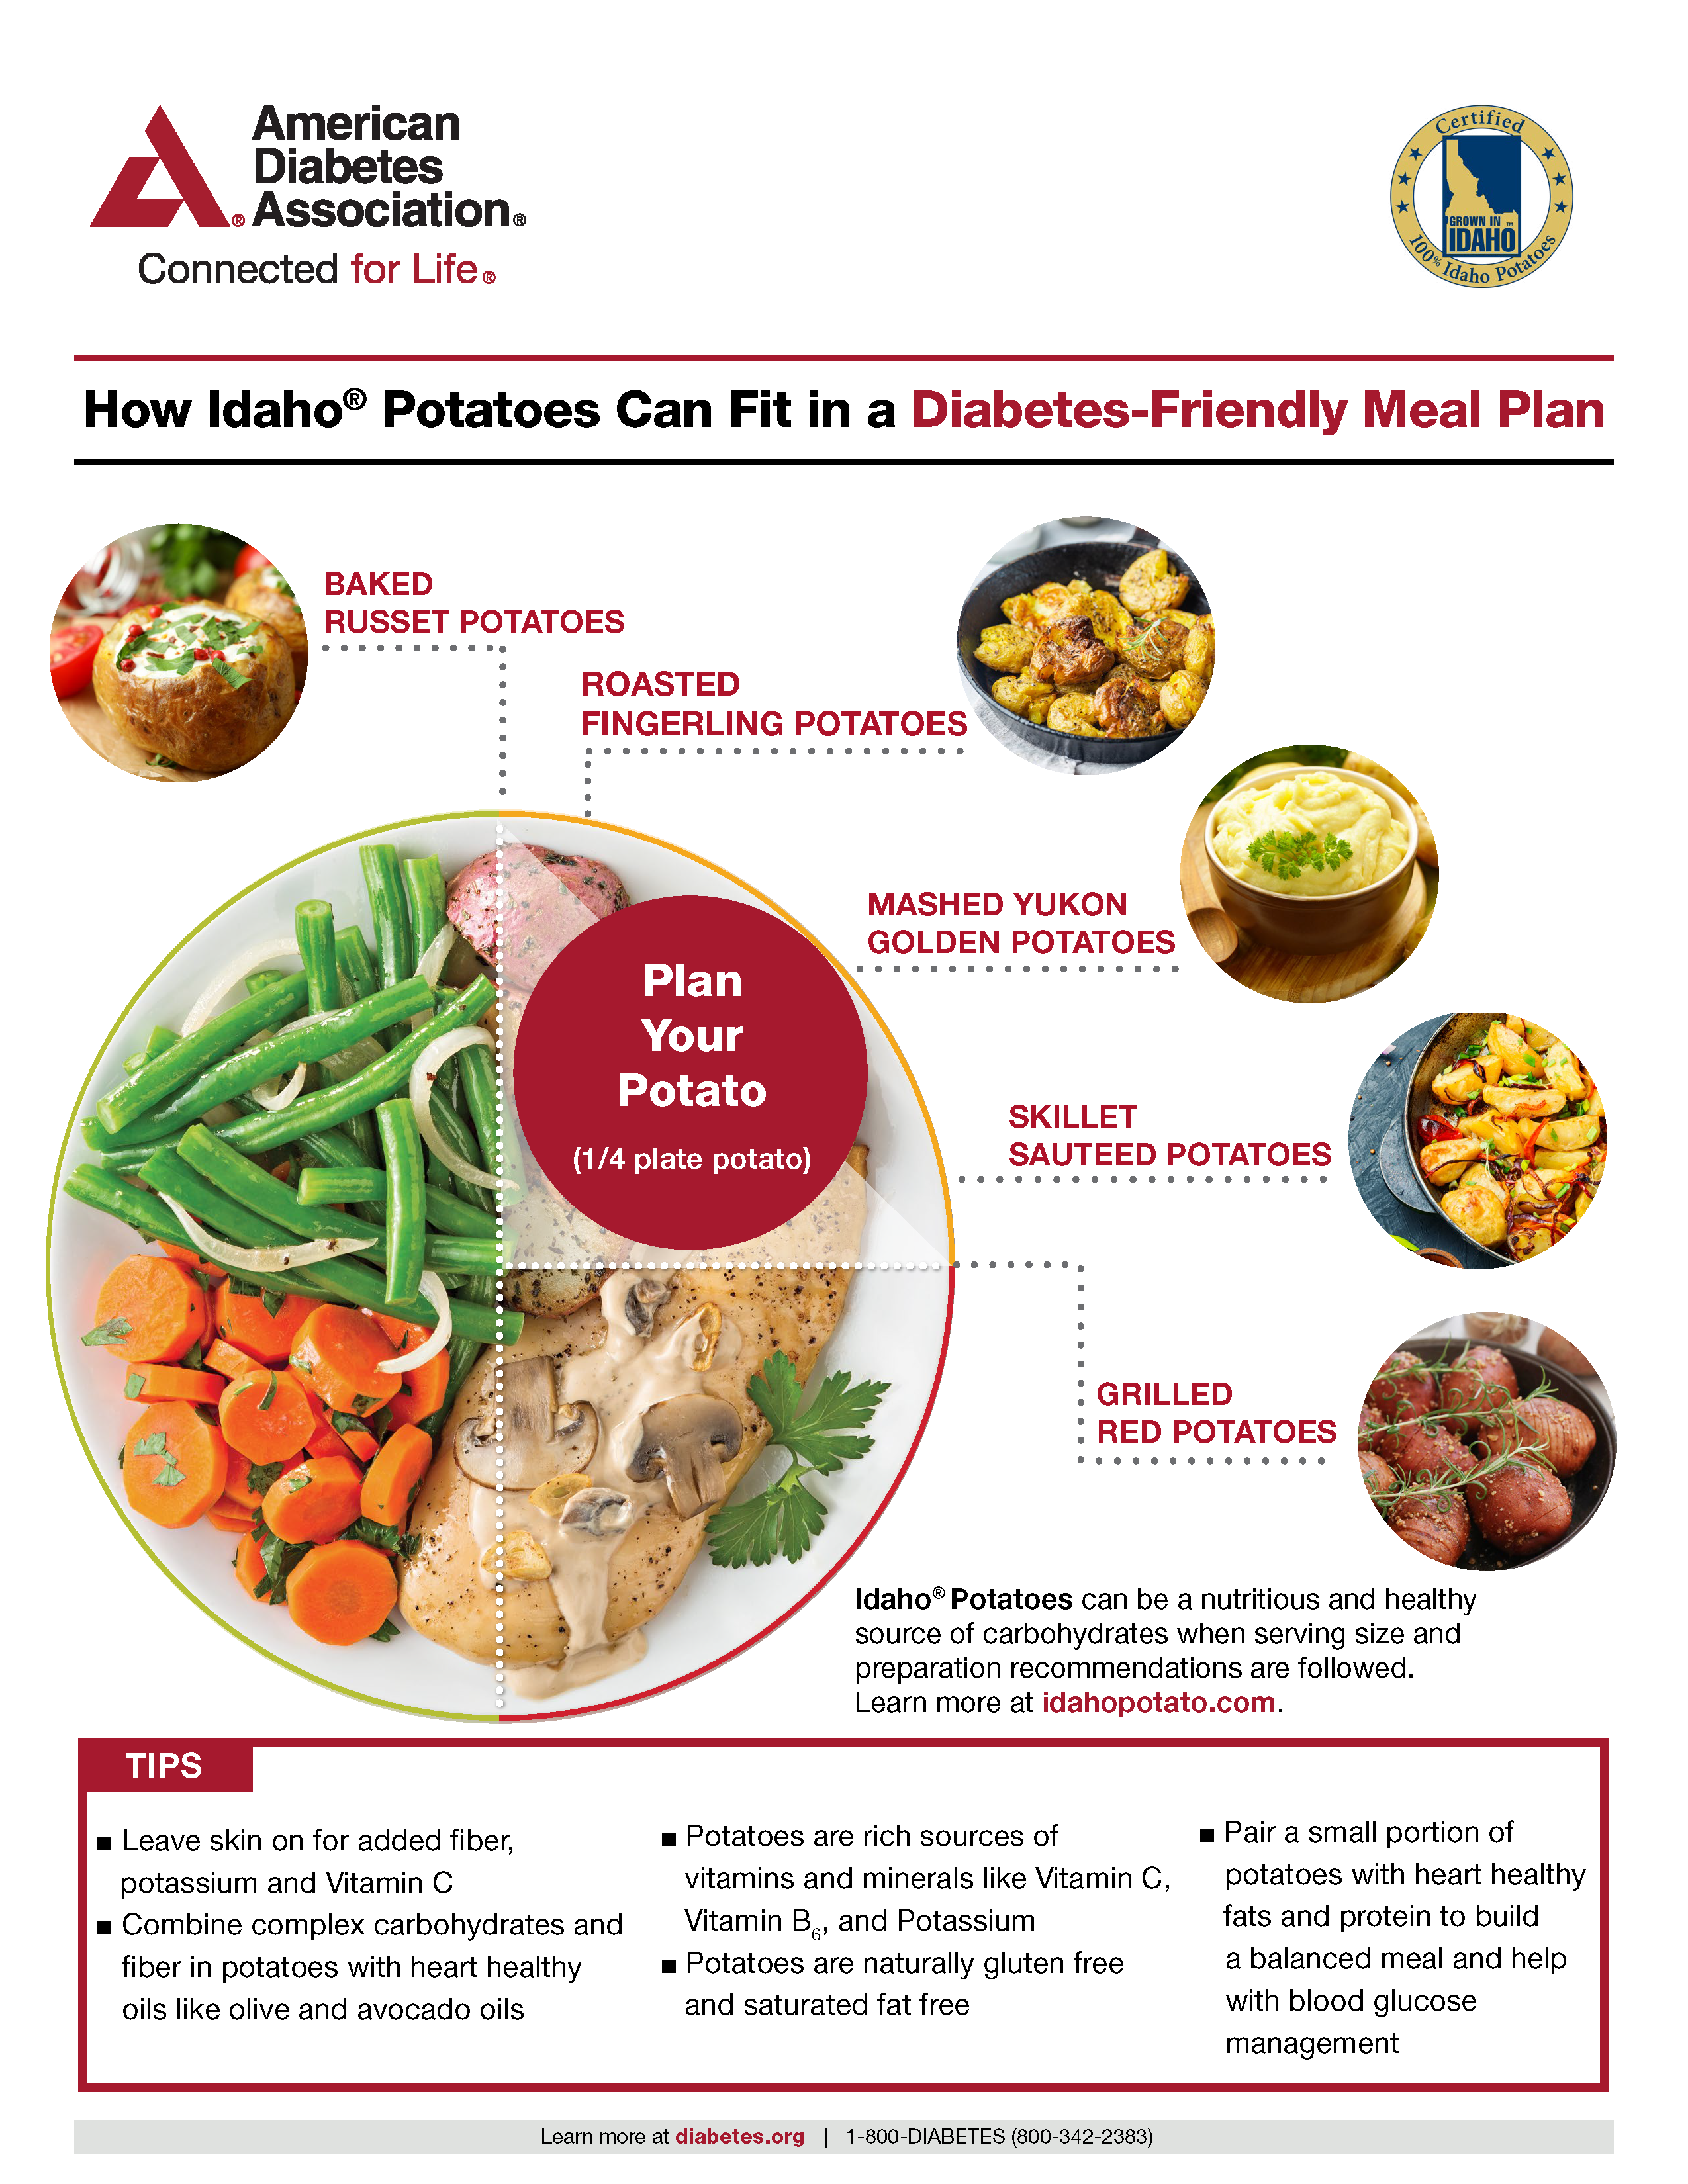 Potatoes and Diabetes Meal Plan